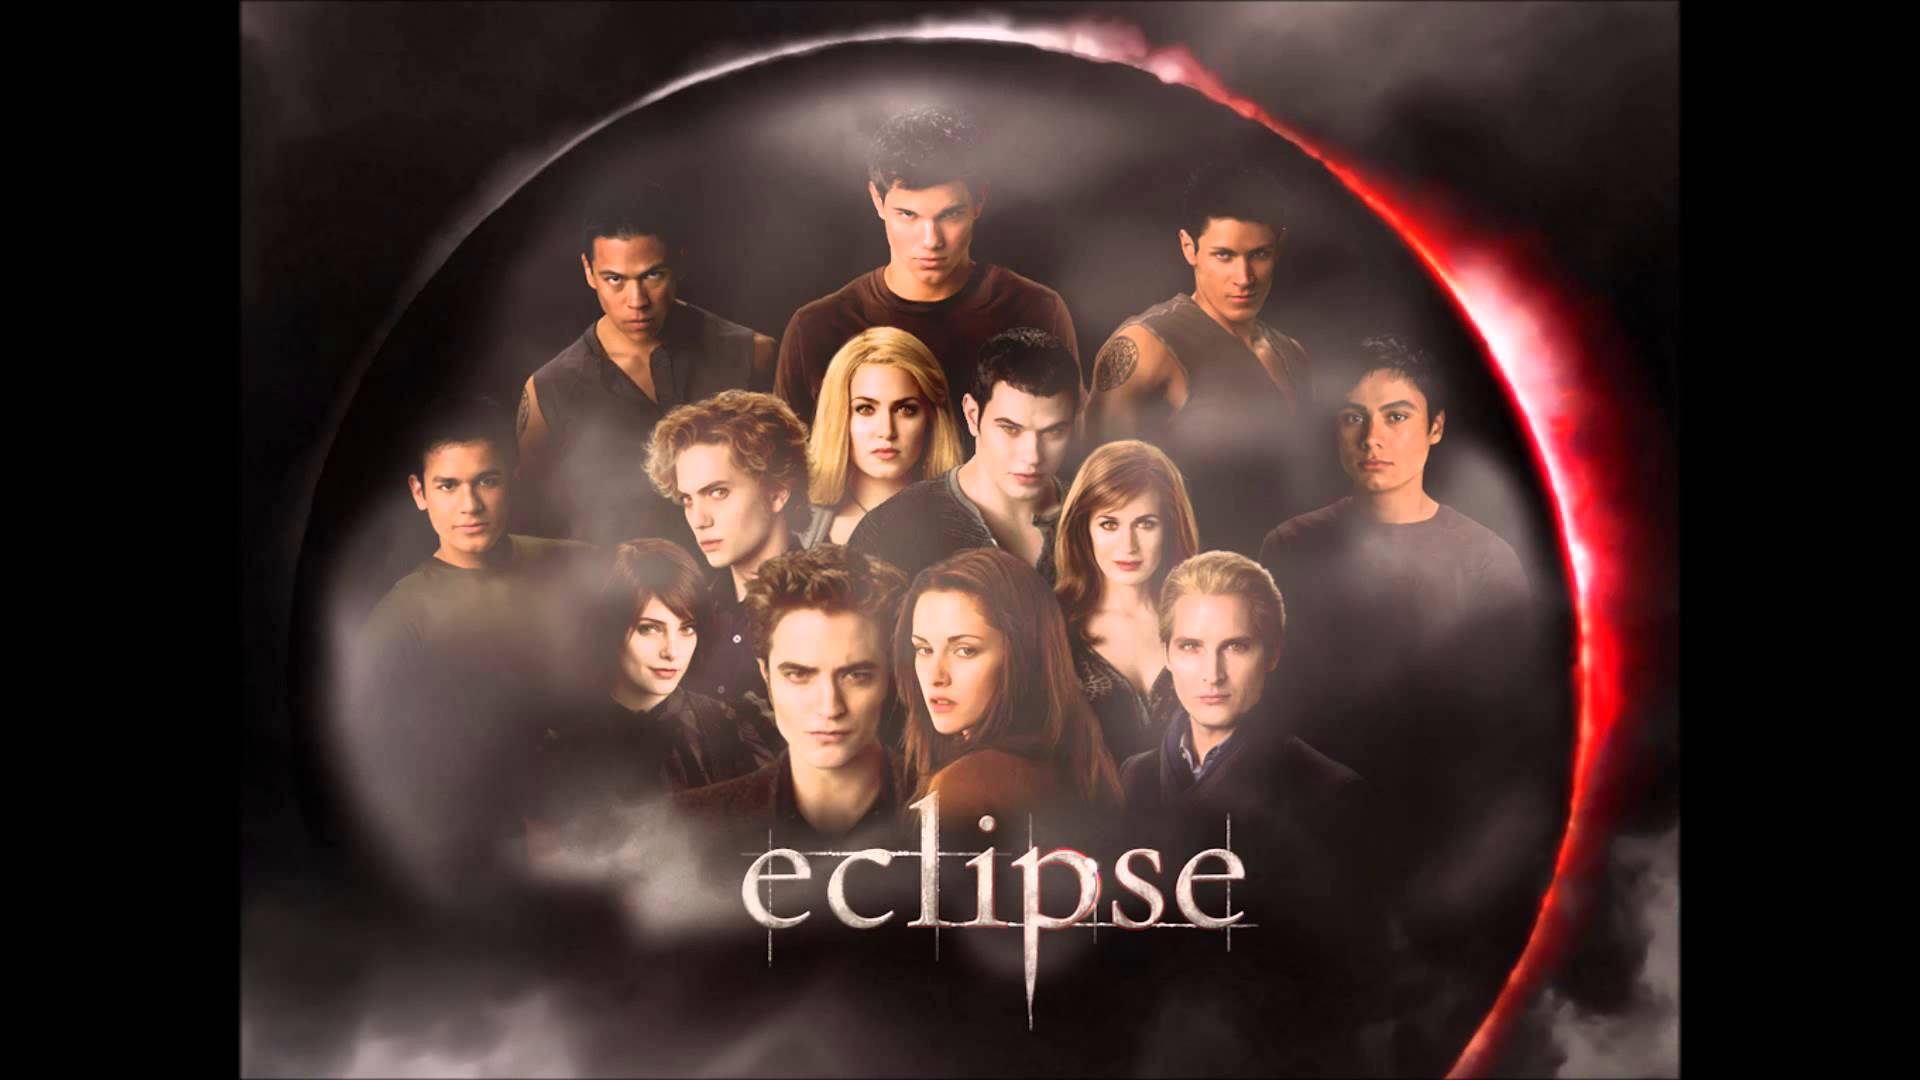 The Twilight Saga Eclipse OST Compilation